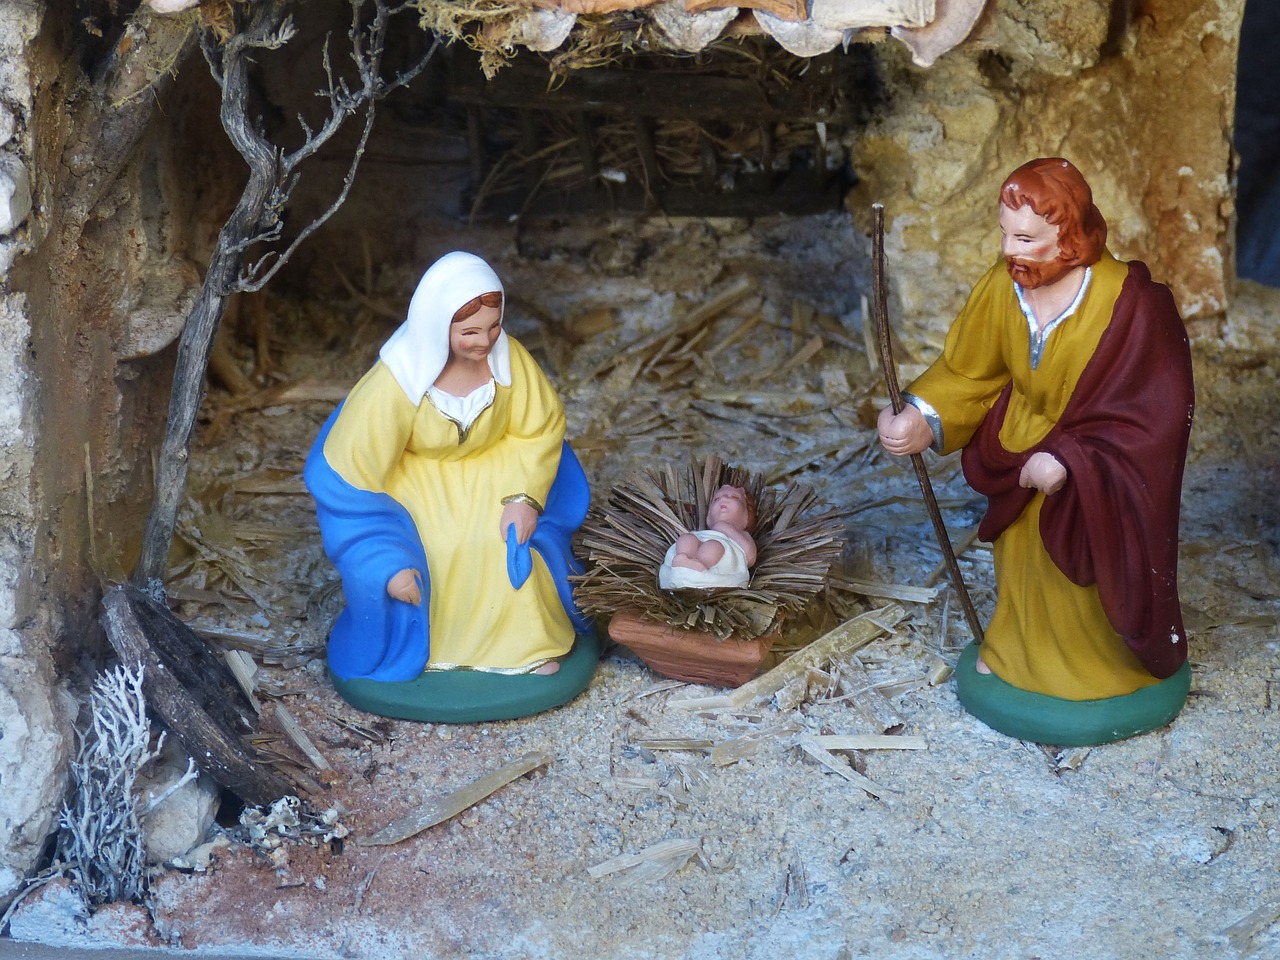 christmas crib nativity scene free photo